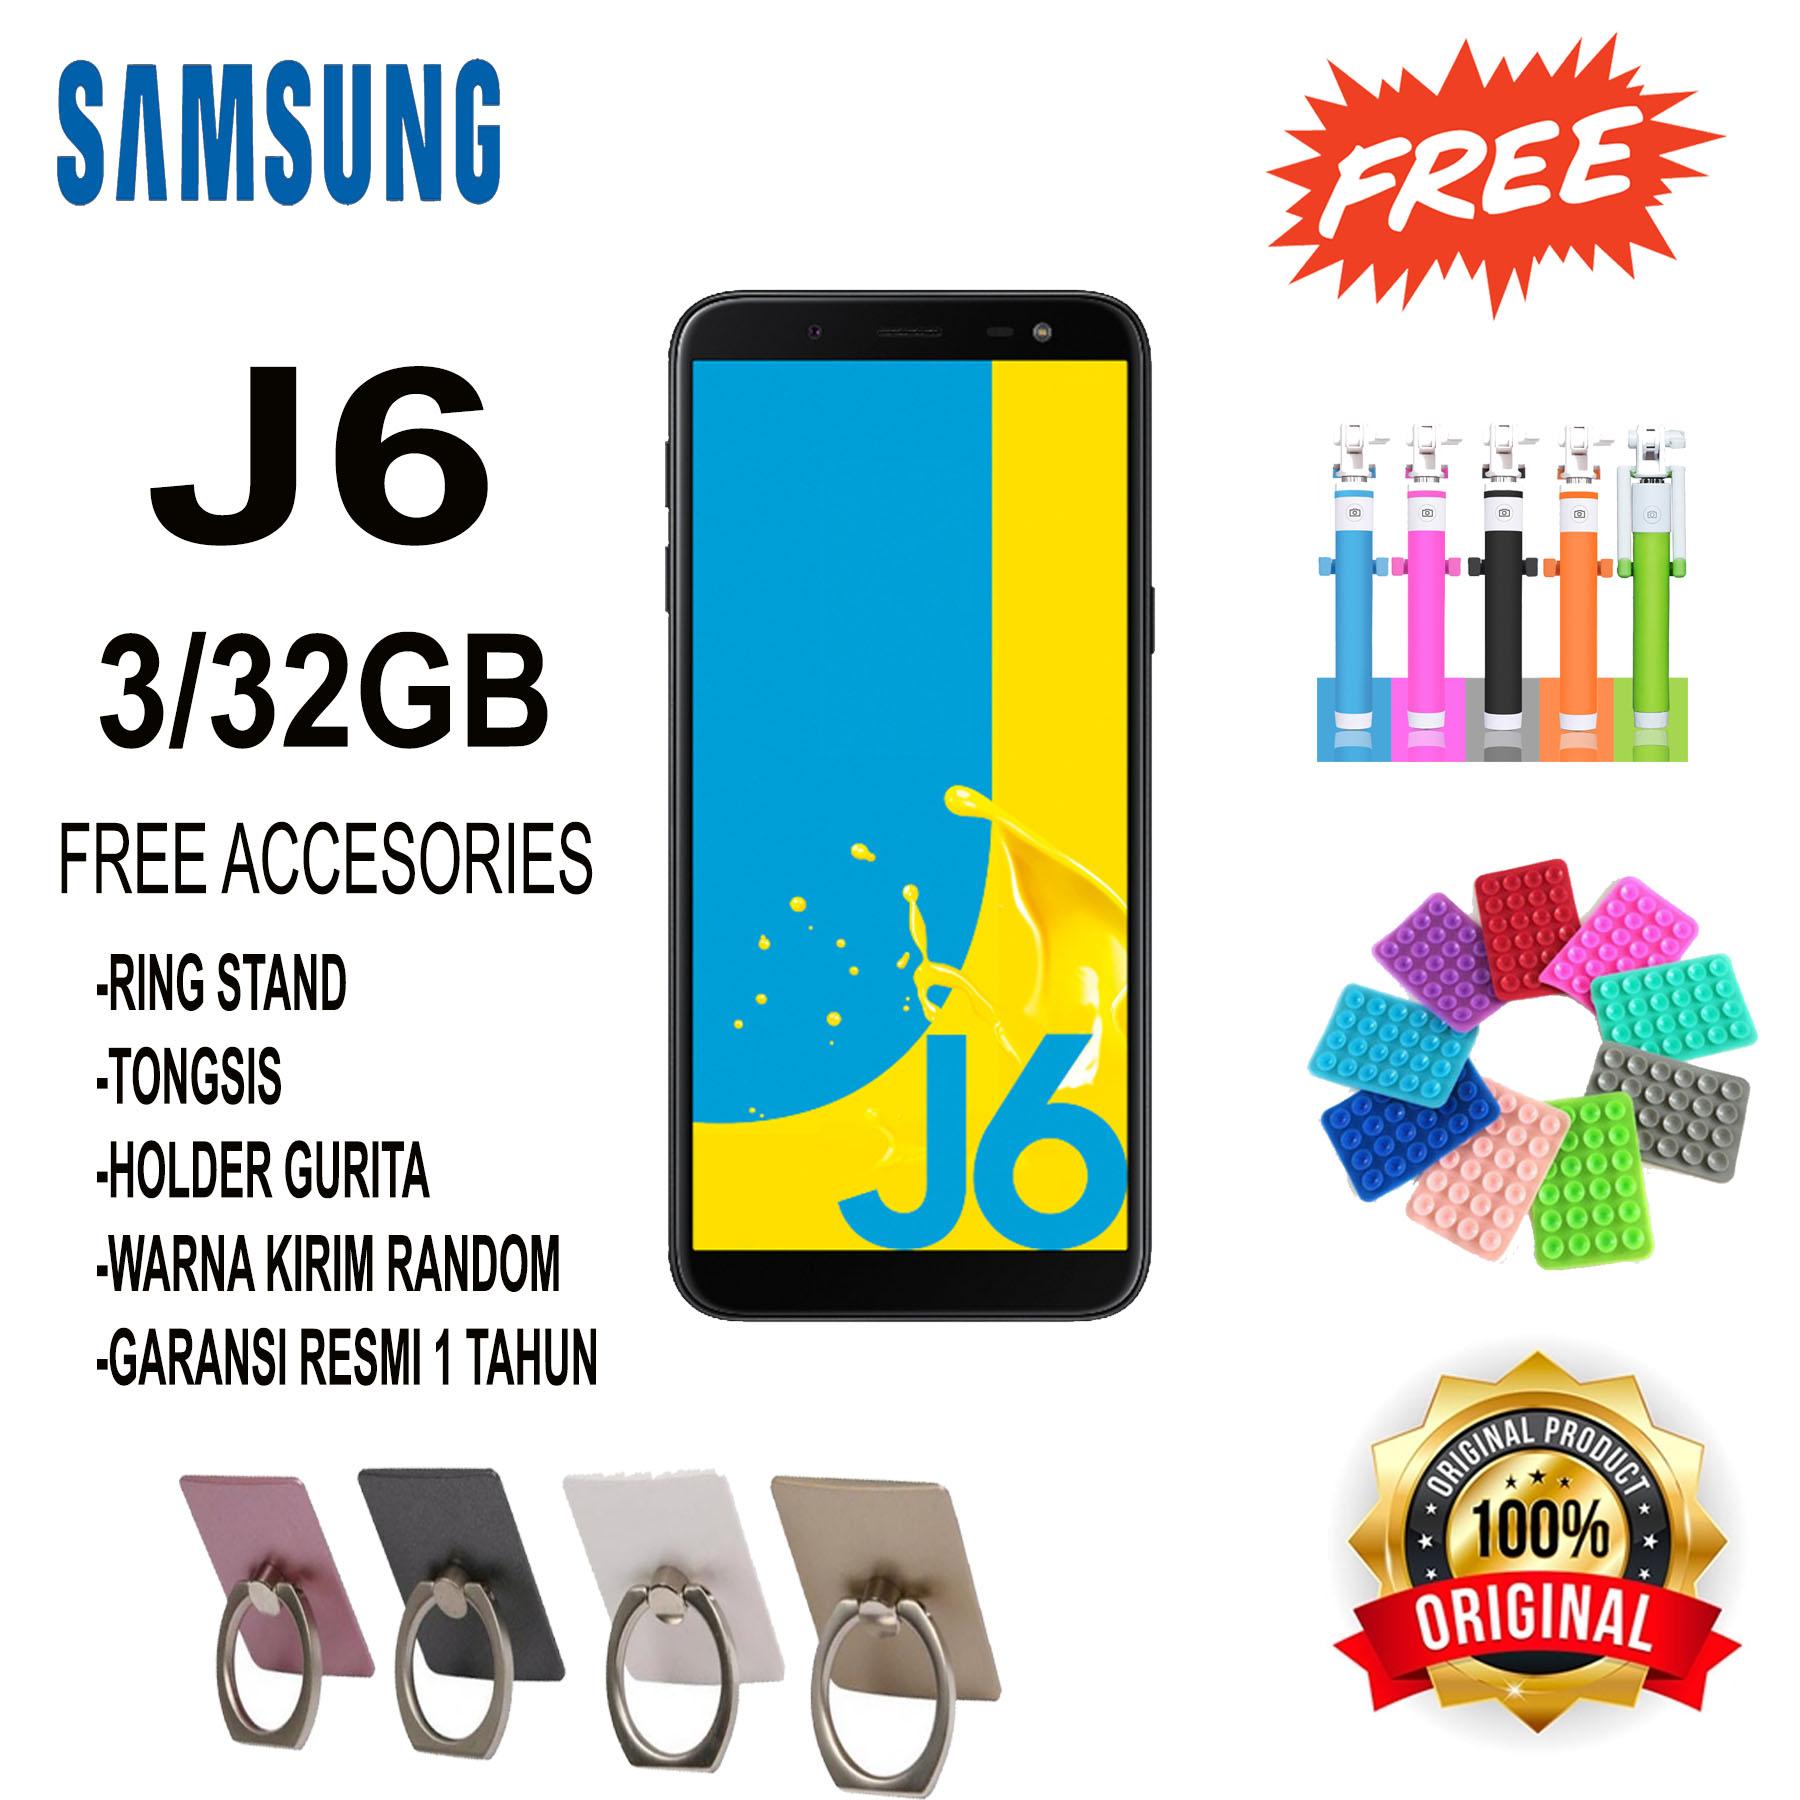 Samsung J6 Smartphone - 3/32GB - Garansi Resmi - Free Accesories 